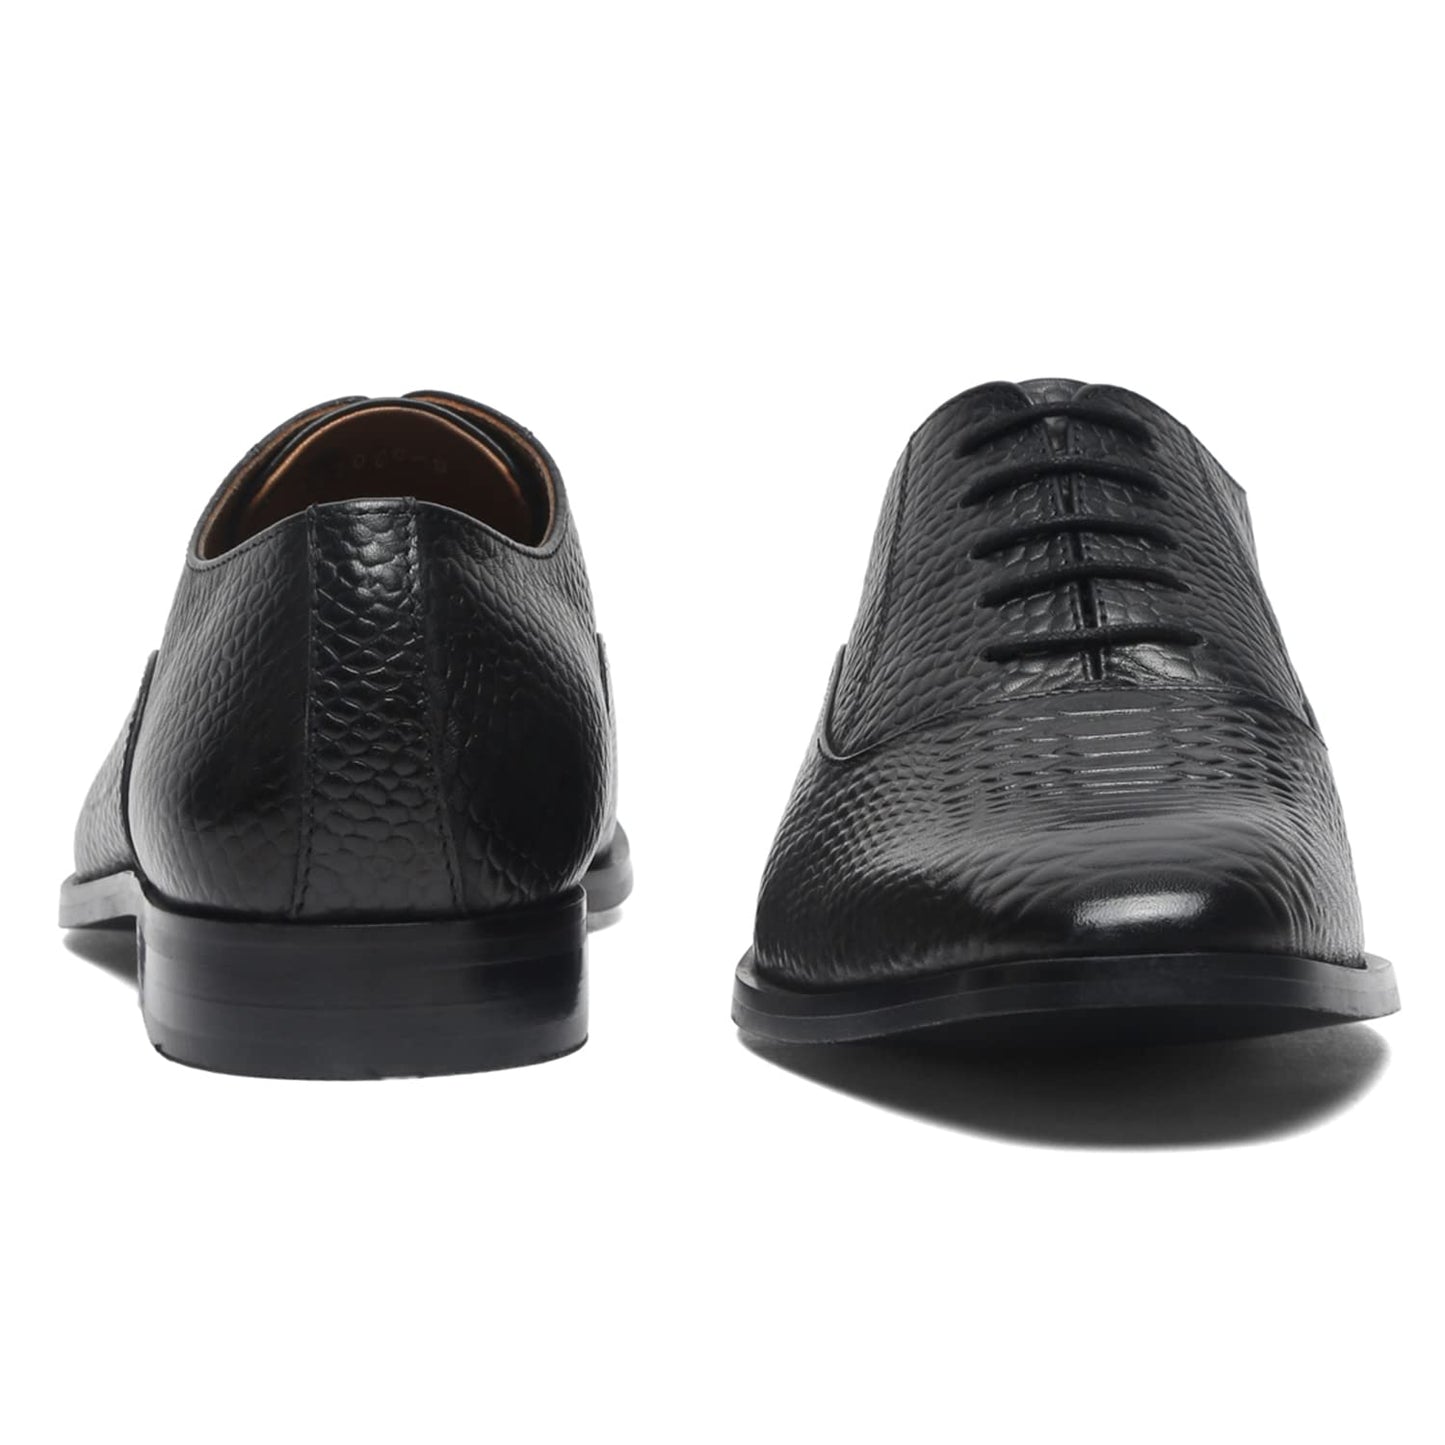 LOUIS STITCH Men's Style Devils Black Derby Shoes Handmade Formal Italian Leather Shoes for Men (EUSNJB) (Size- 8 UK)